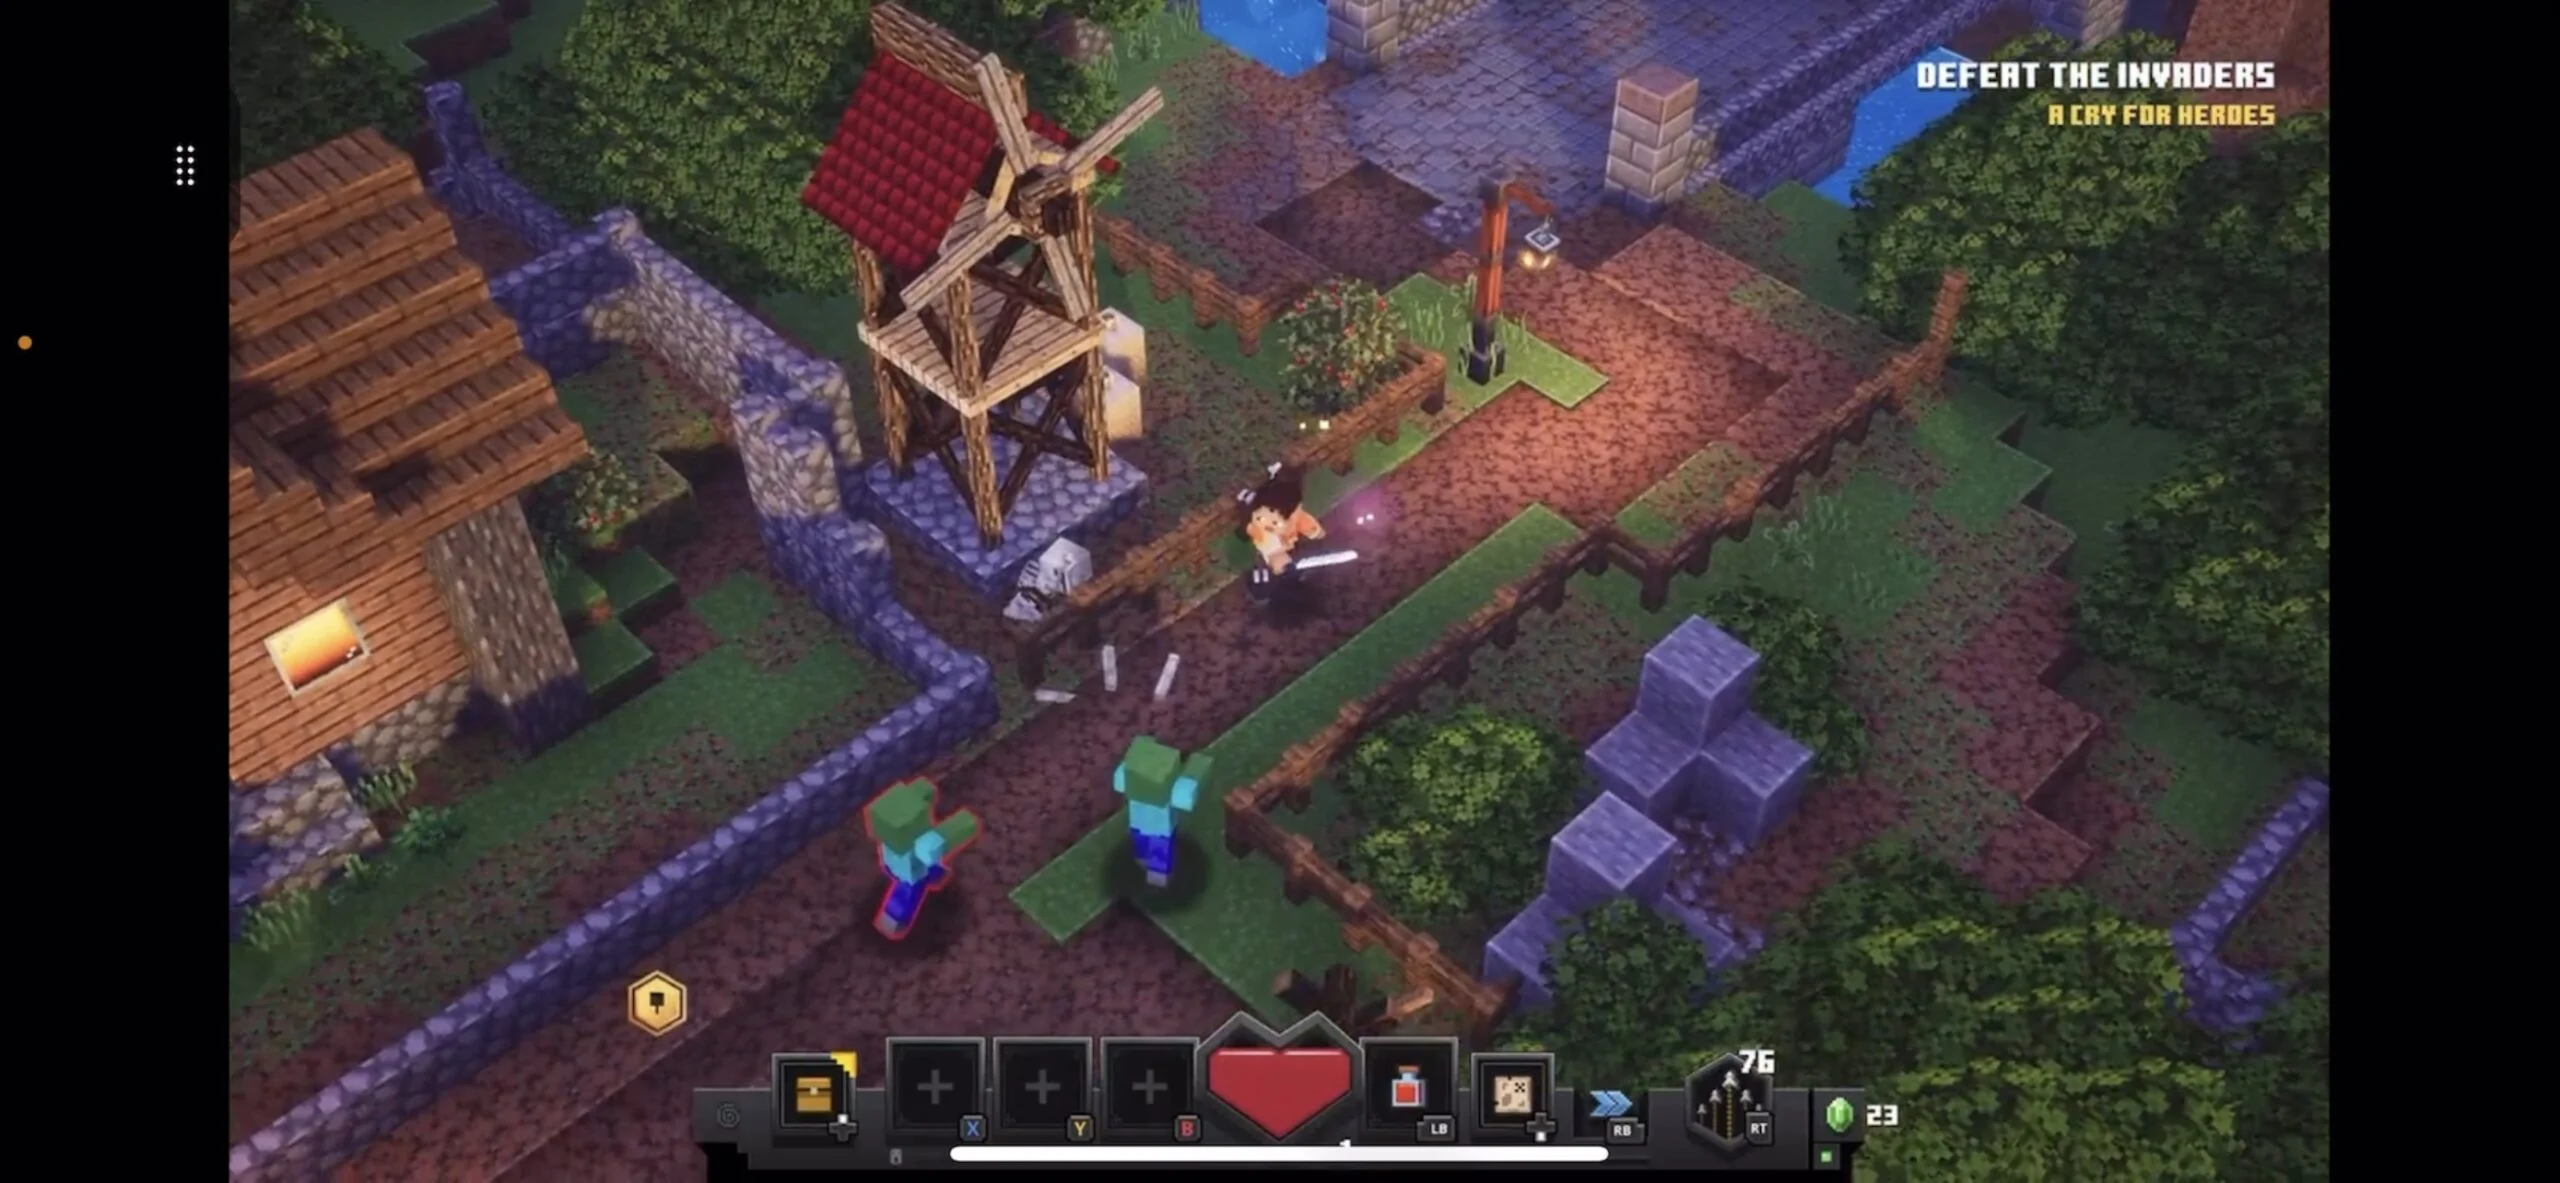 Jio 5G Xcloud Minecraft gameplay scaled